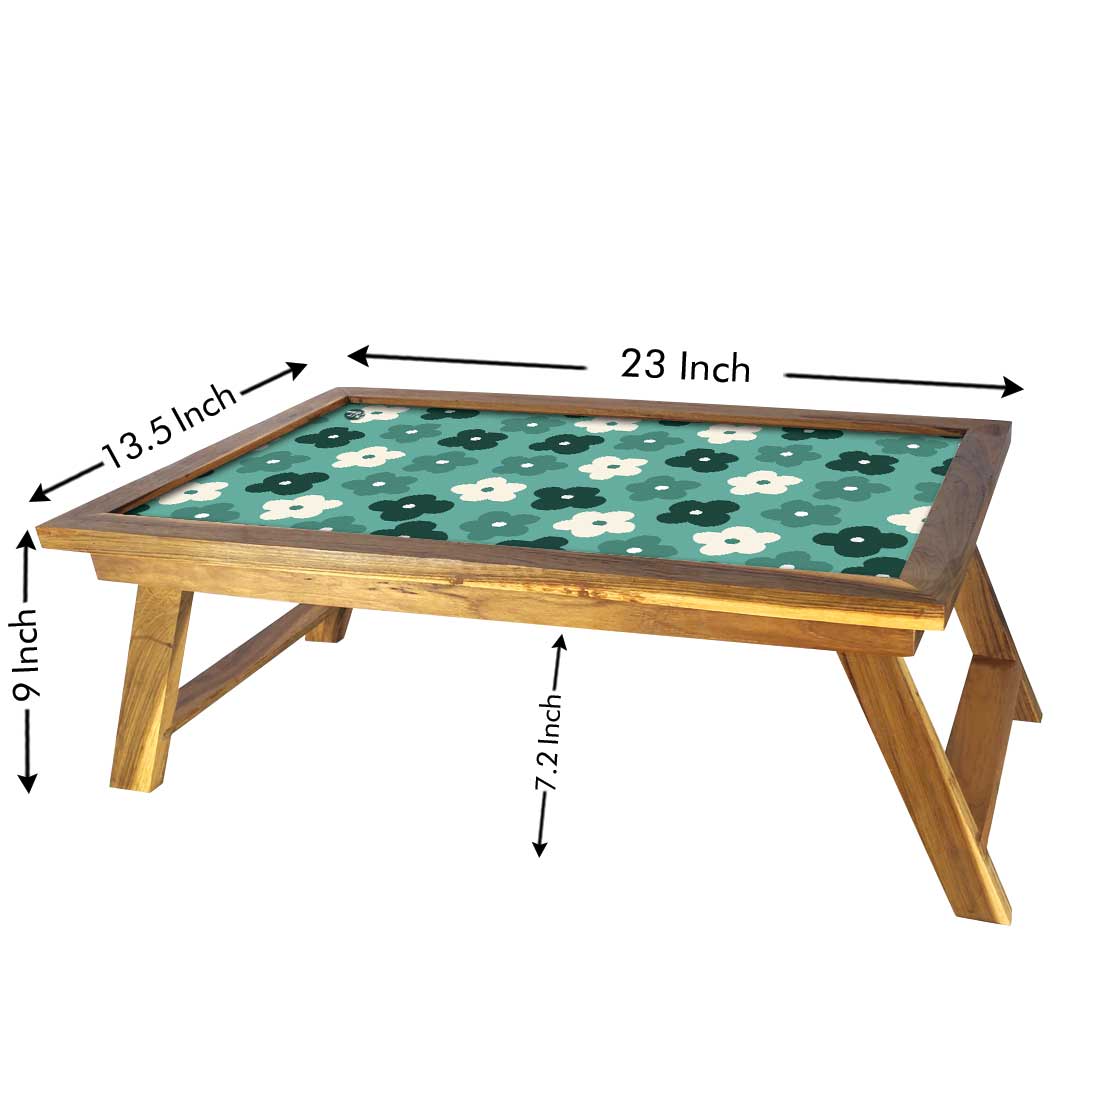 Nutcase Folding Laptop Table For Home Bed Lapdesk Breakfast Table Foldable Teak Wooden Study Desk - Irish Flowers Nutcase